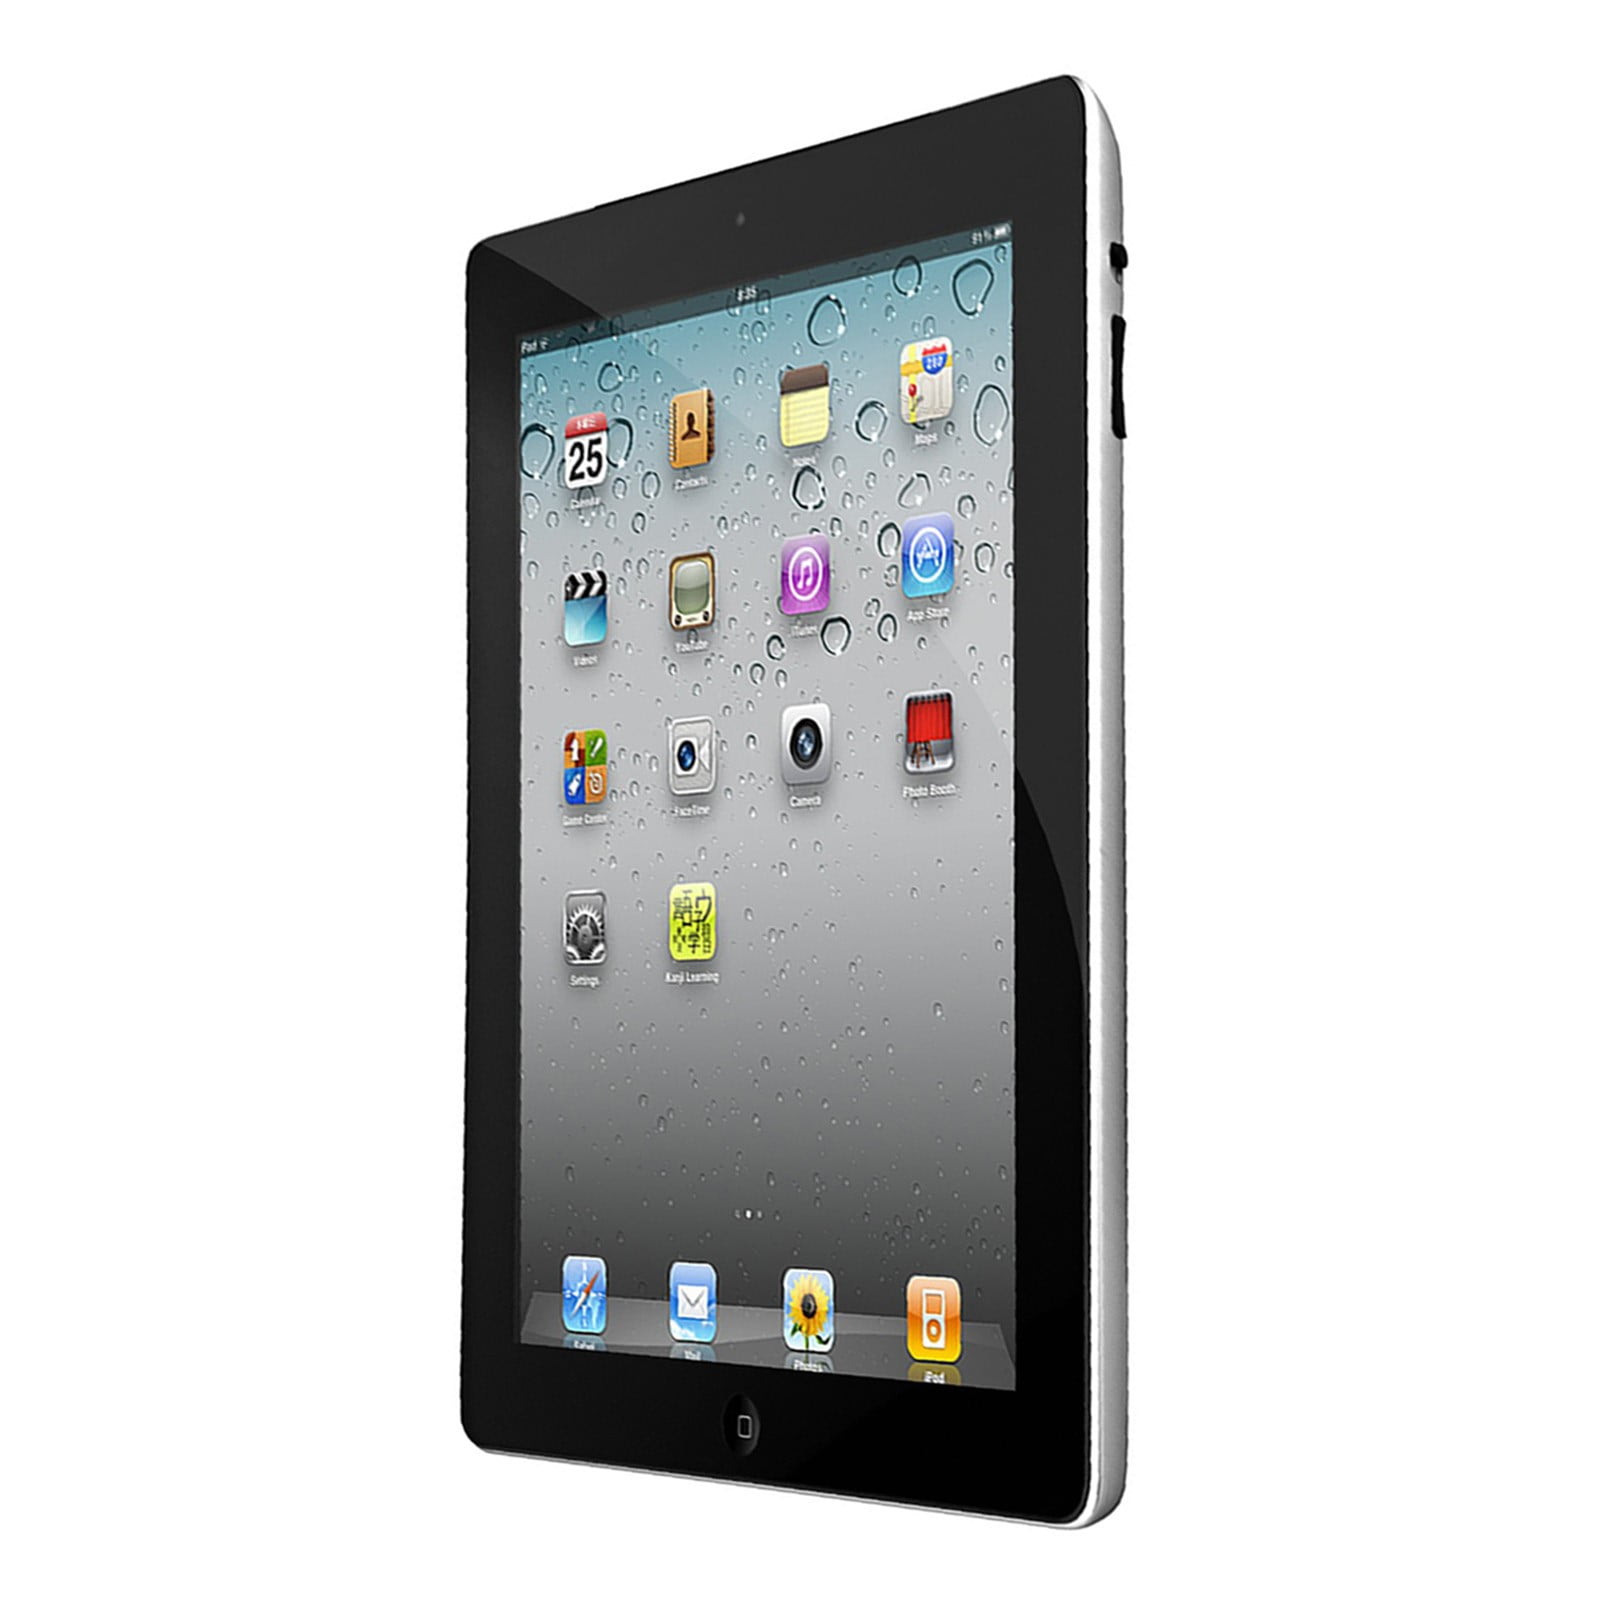 Certified Refurbished Apple iPad Air 2 WiFi Tablet 16GB - Walmart.com